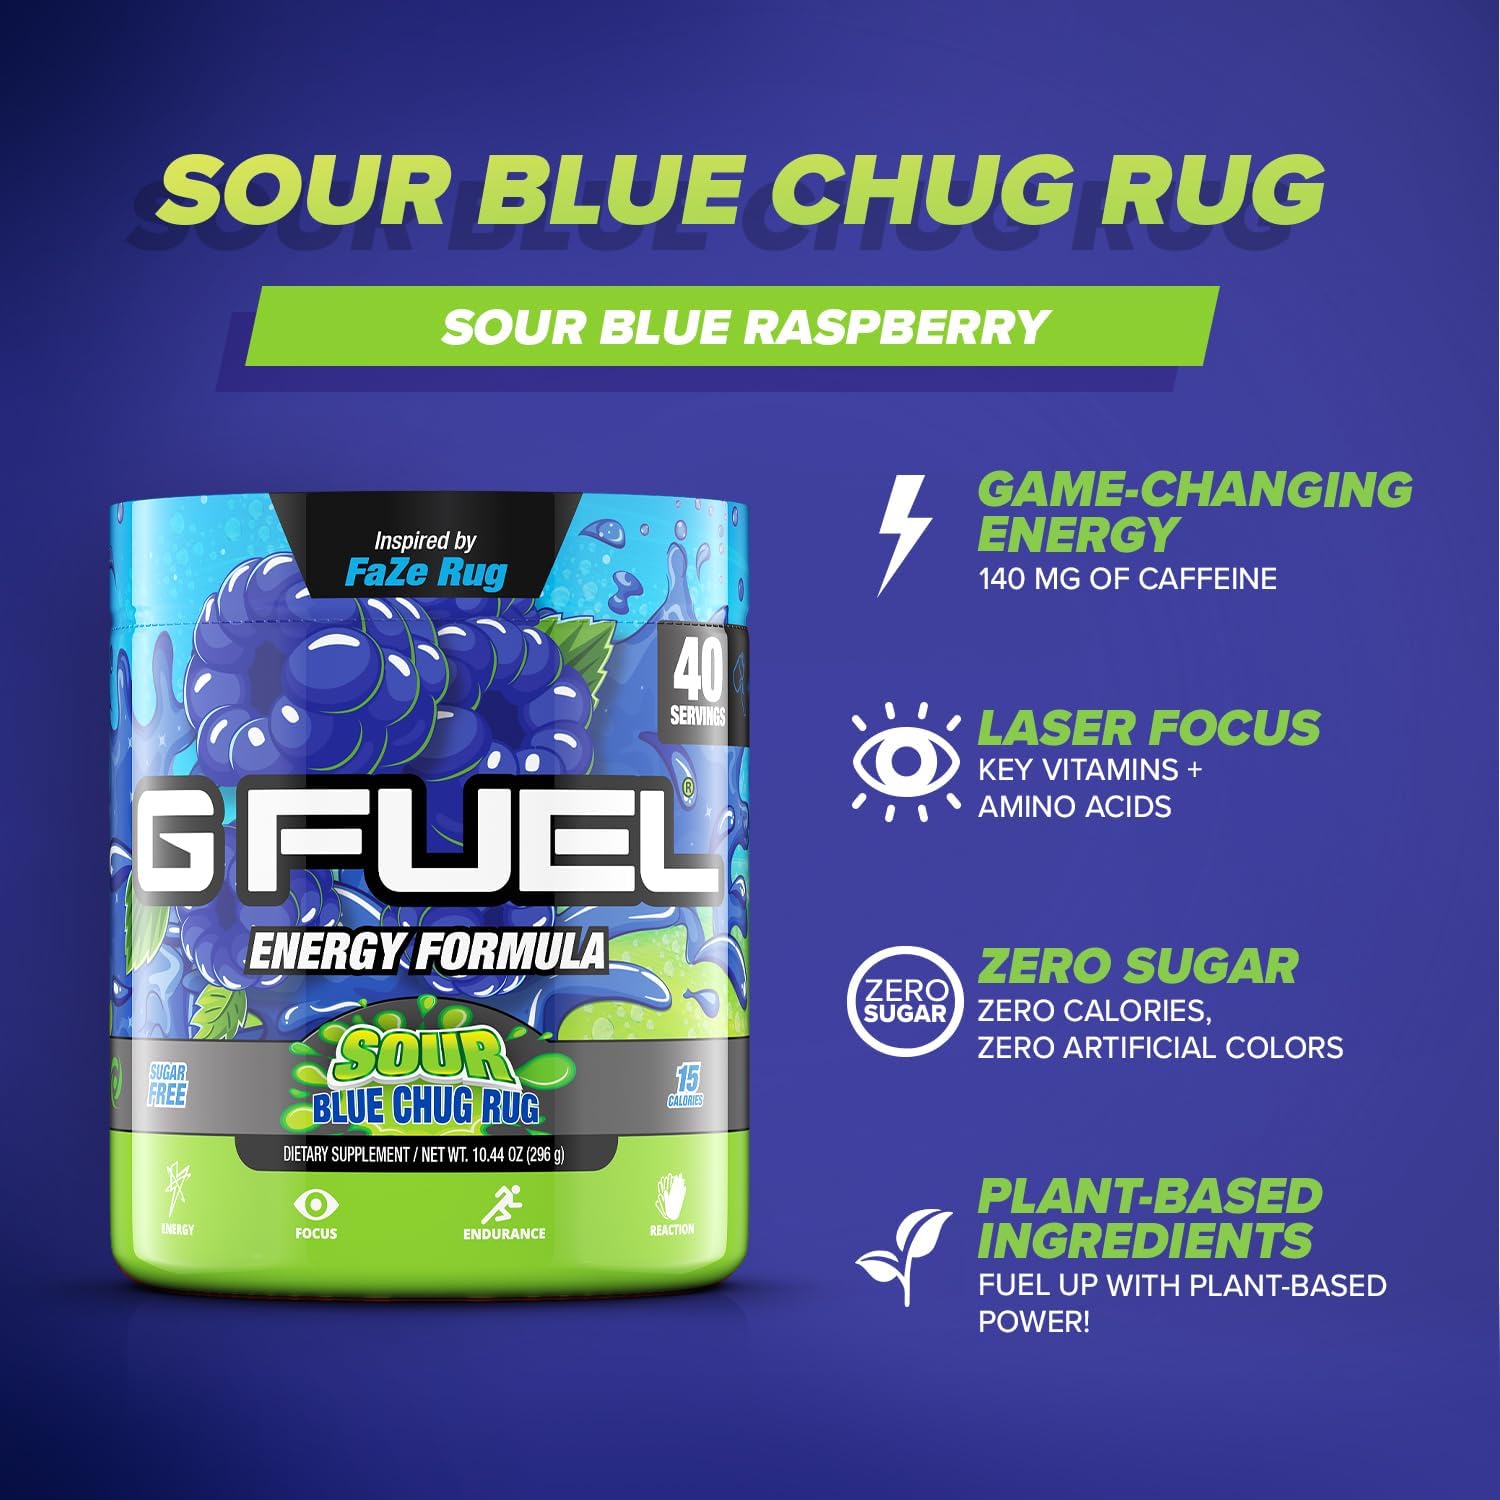 G Fuel Faze Rug Energy Powder, Sugar Free, Clean Caffeine Focus Supple